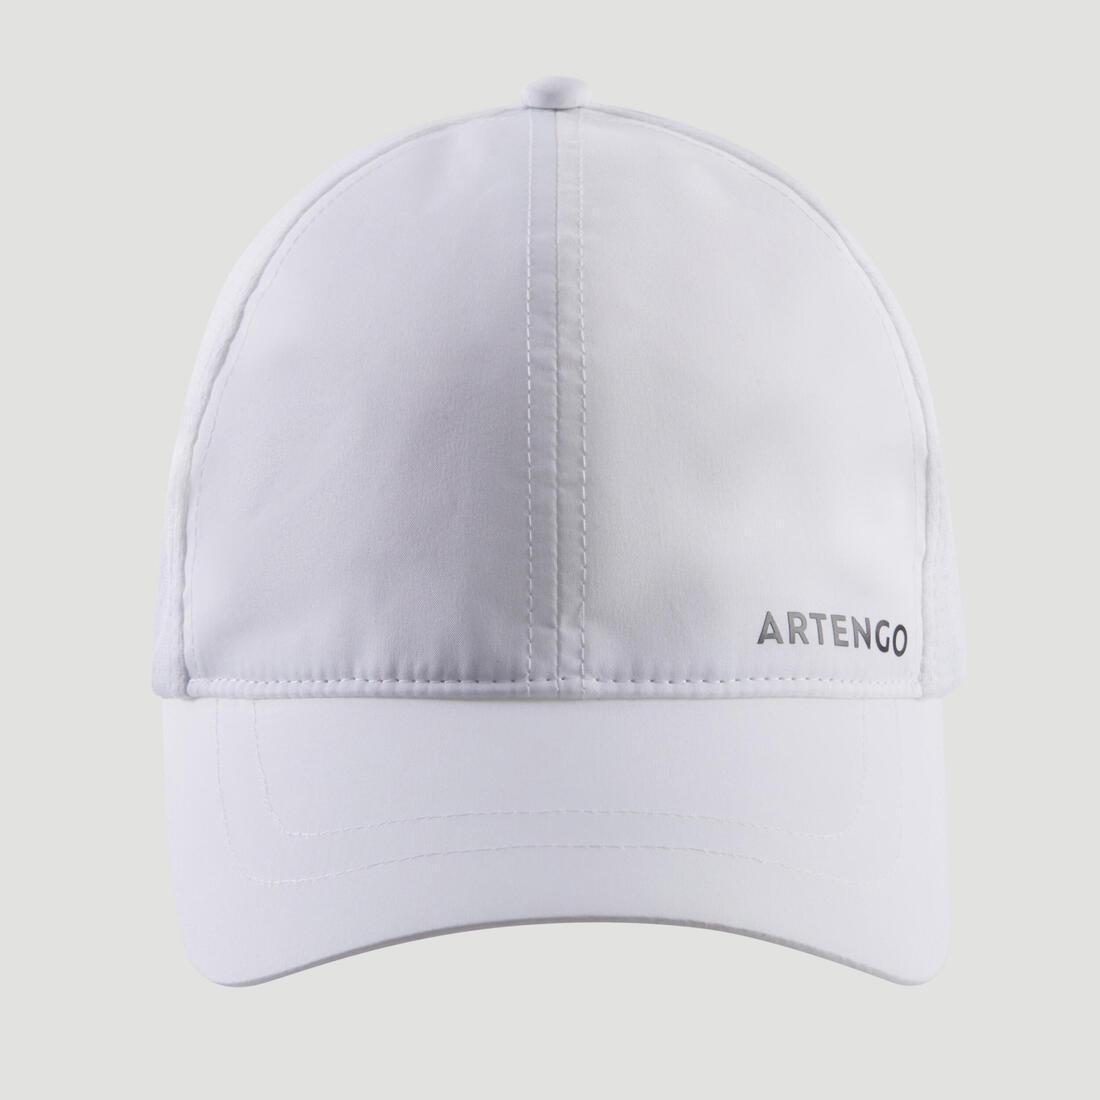 ARTENGO - Tennis Cap Tc 100, Black